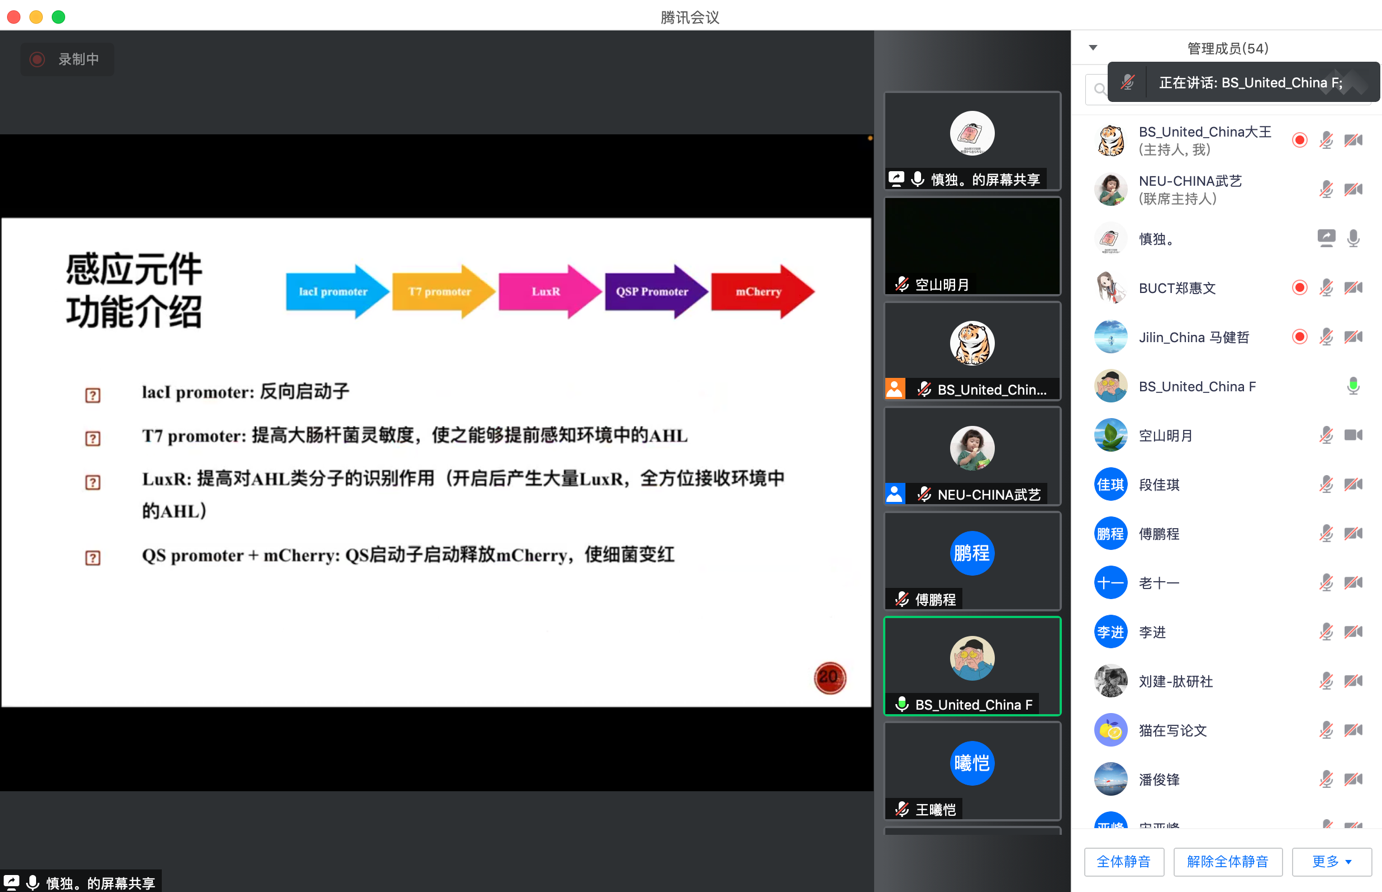 An online chat in Jilin